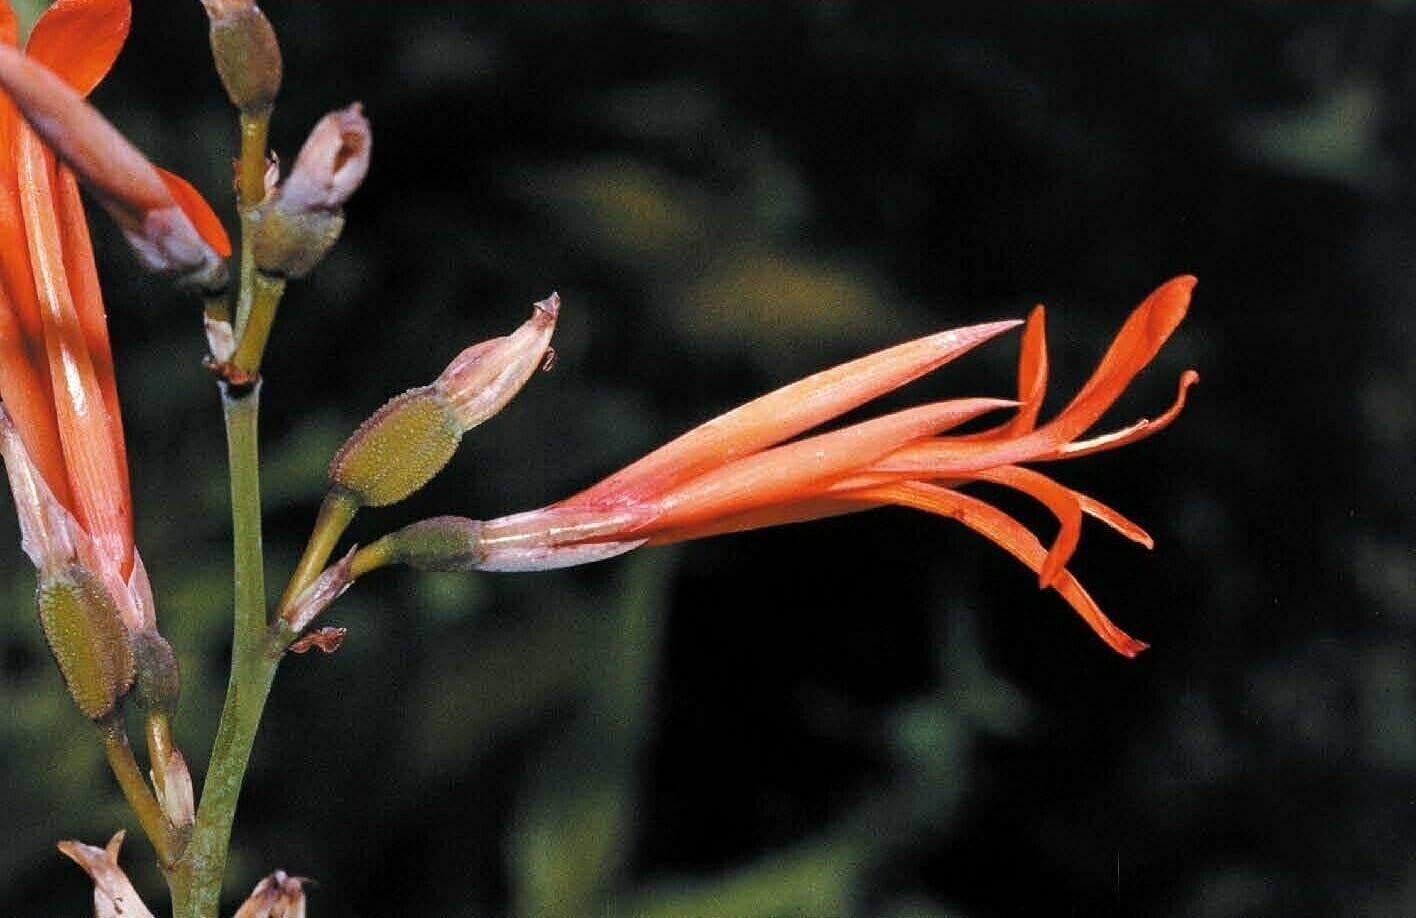 Canna Lily  "Tuerckheimii Giant" 10 seeds ORGANIC - own crop